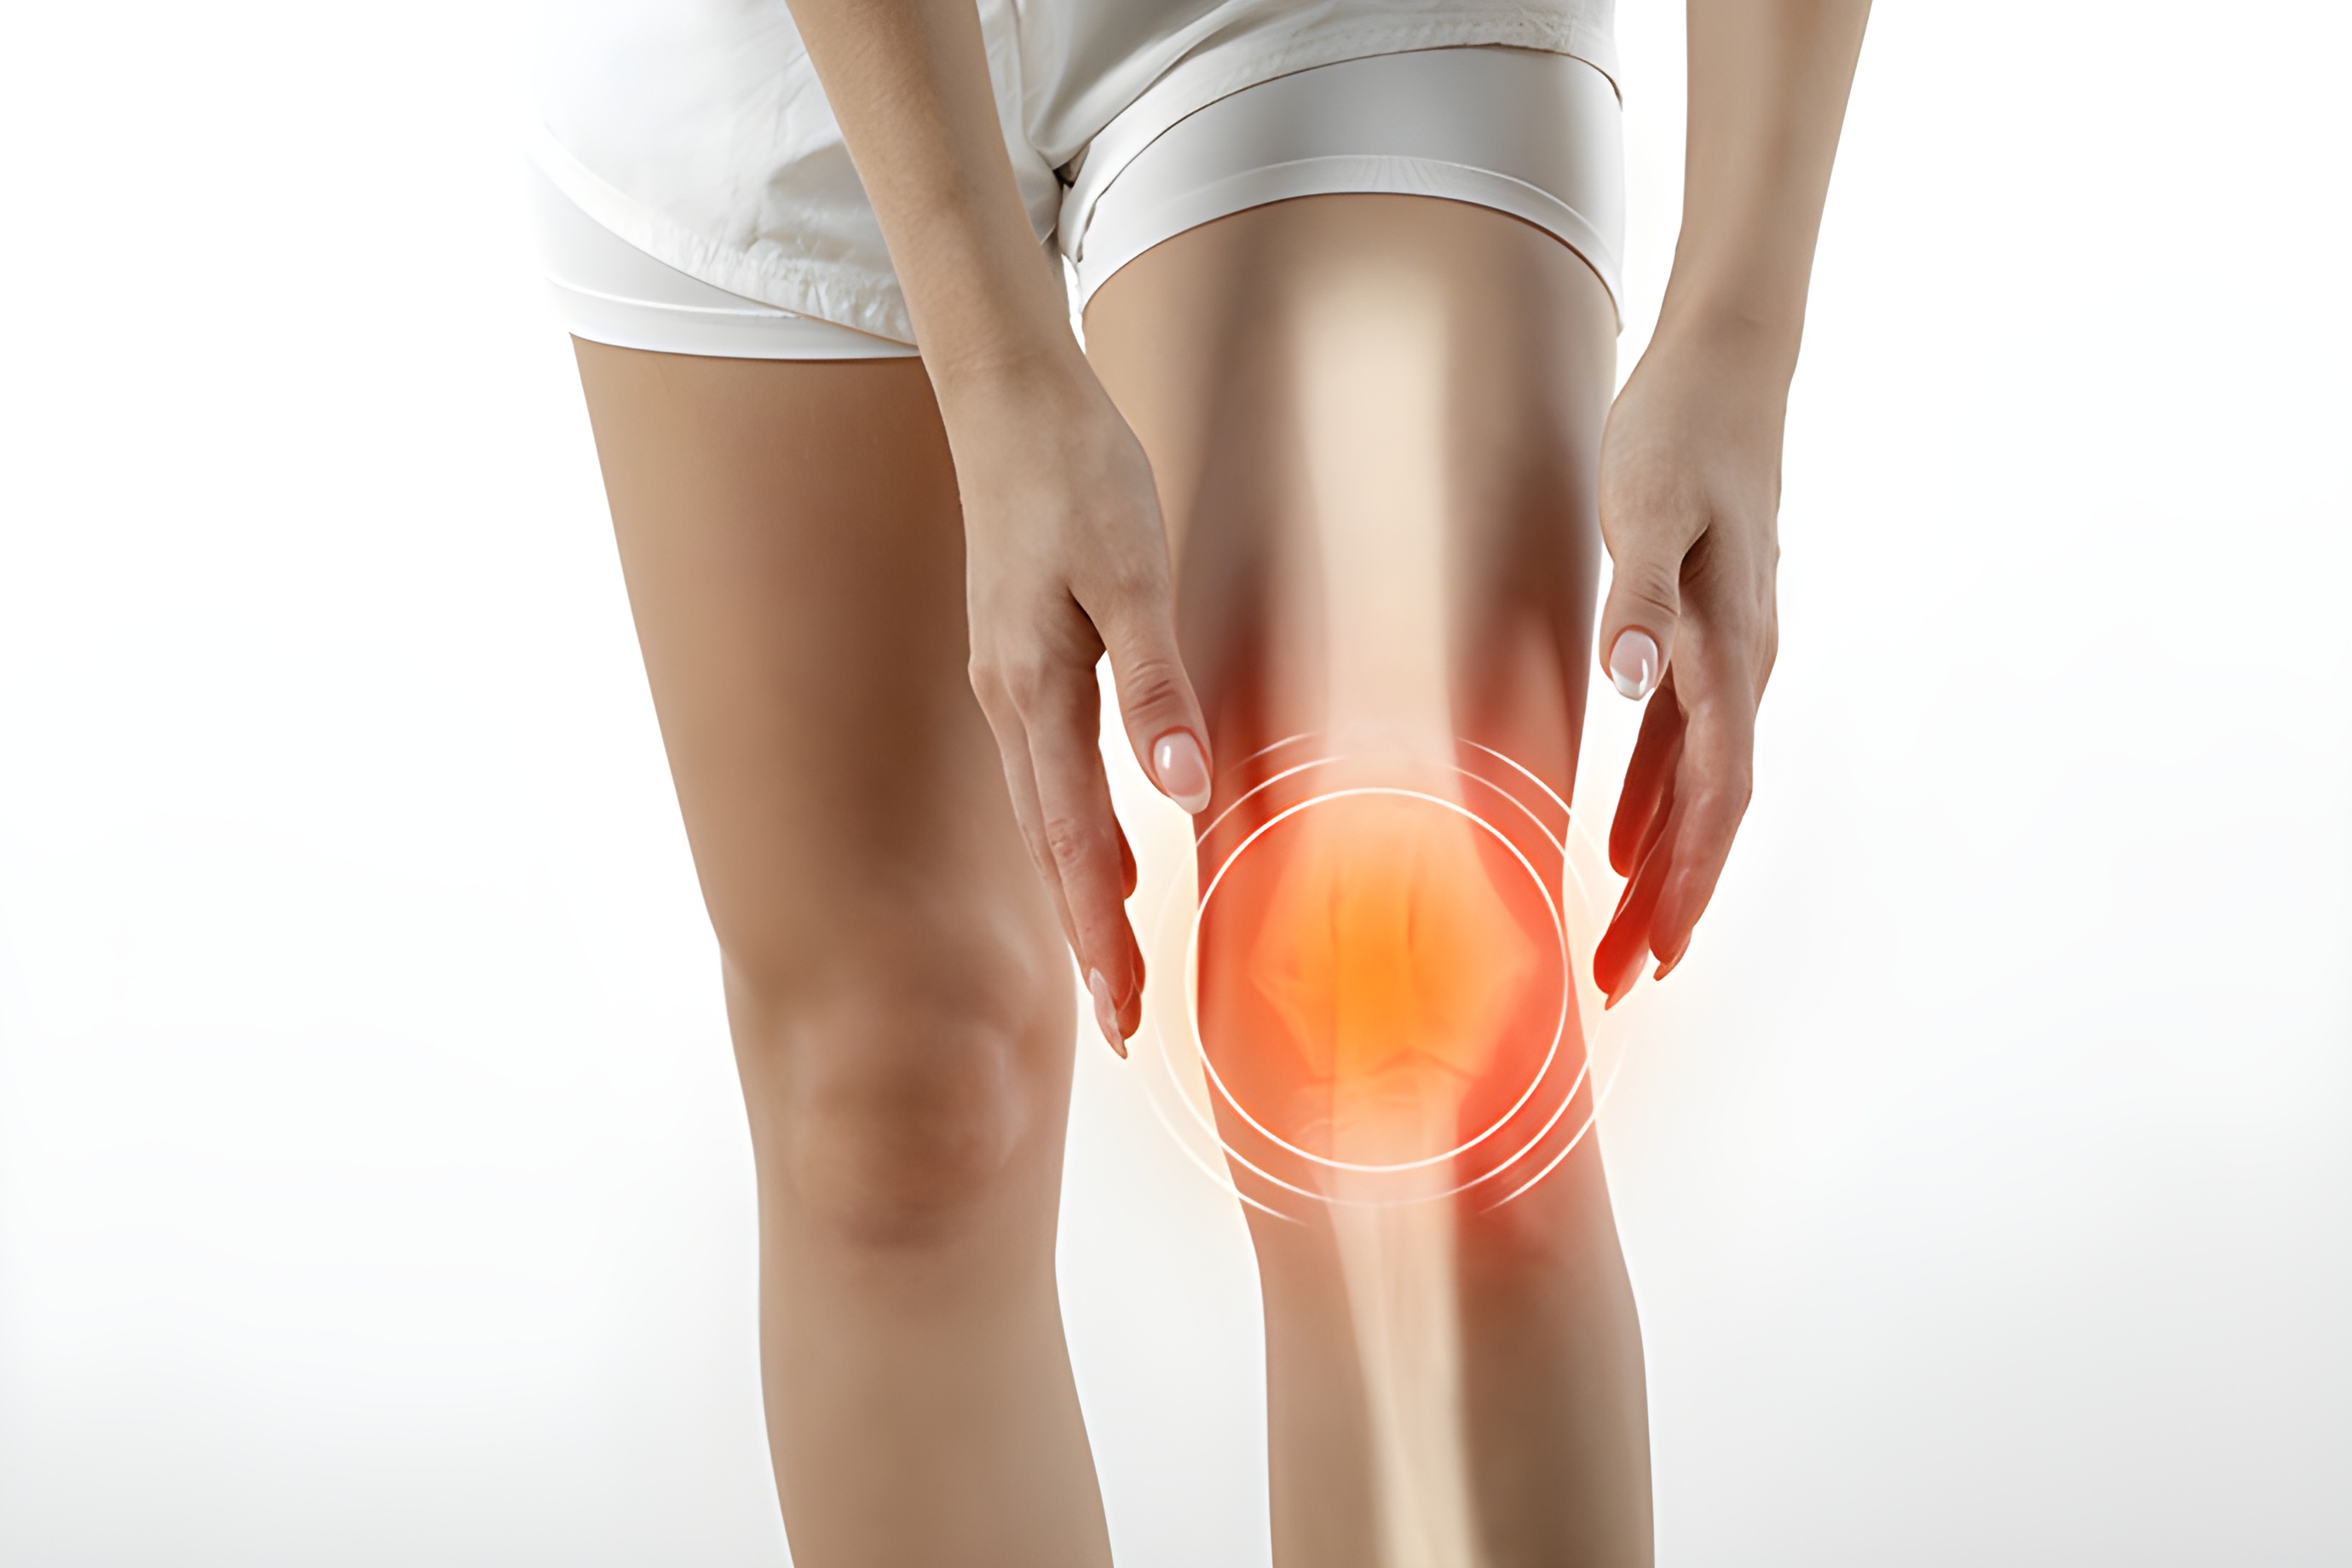 Схематический рисунок боли в колене при остеоартрите коленного сустава